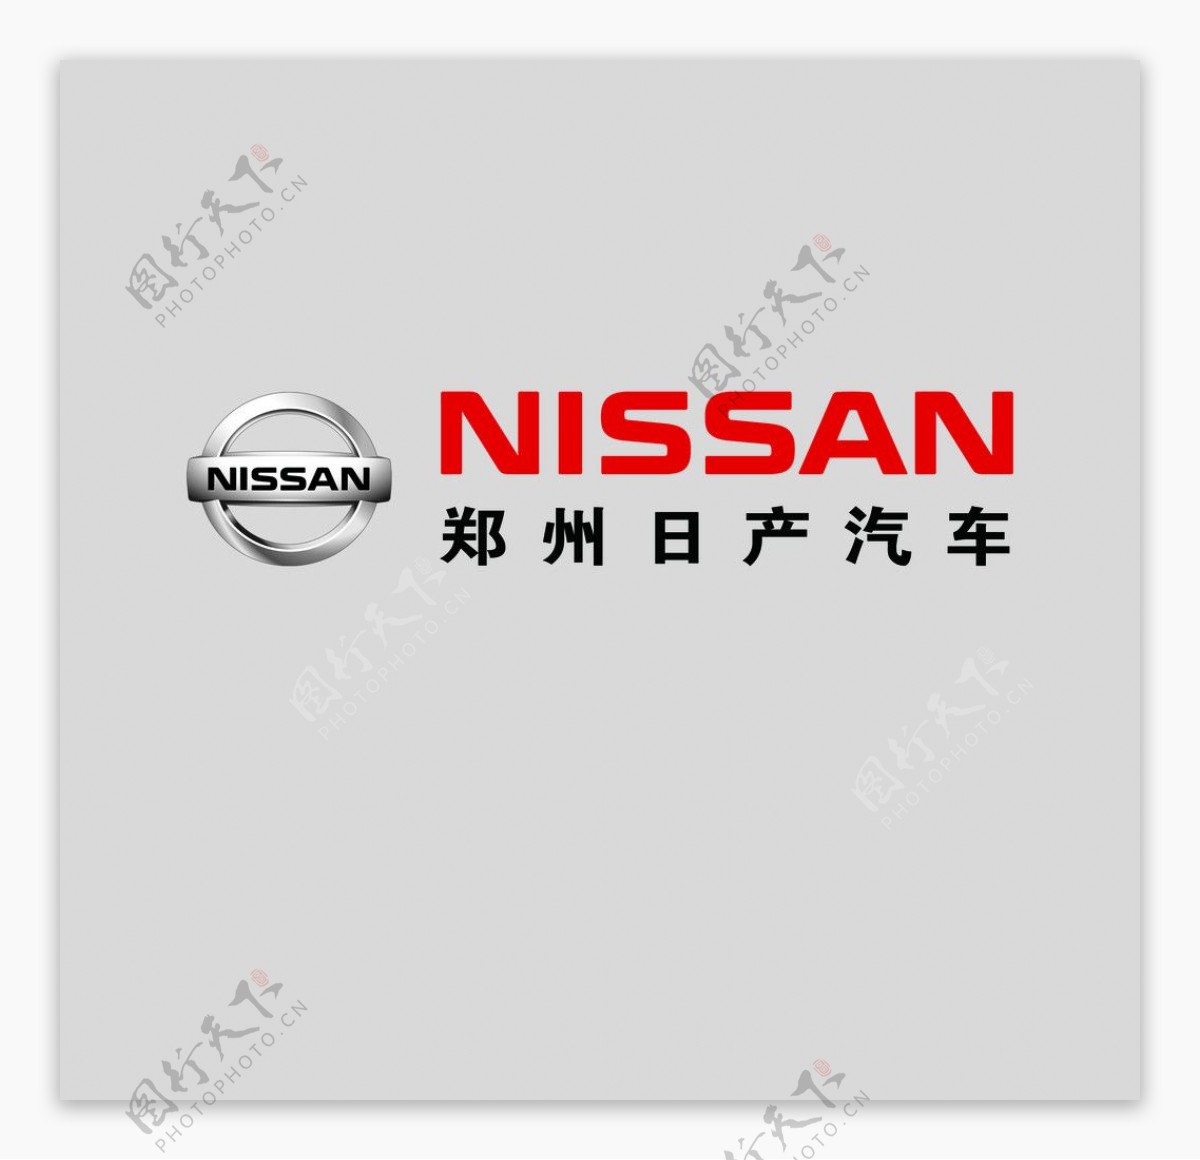 Le logo voiture Nissan, embleme [sigle lancia]